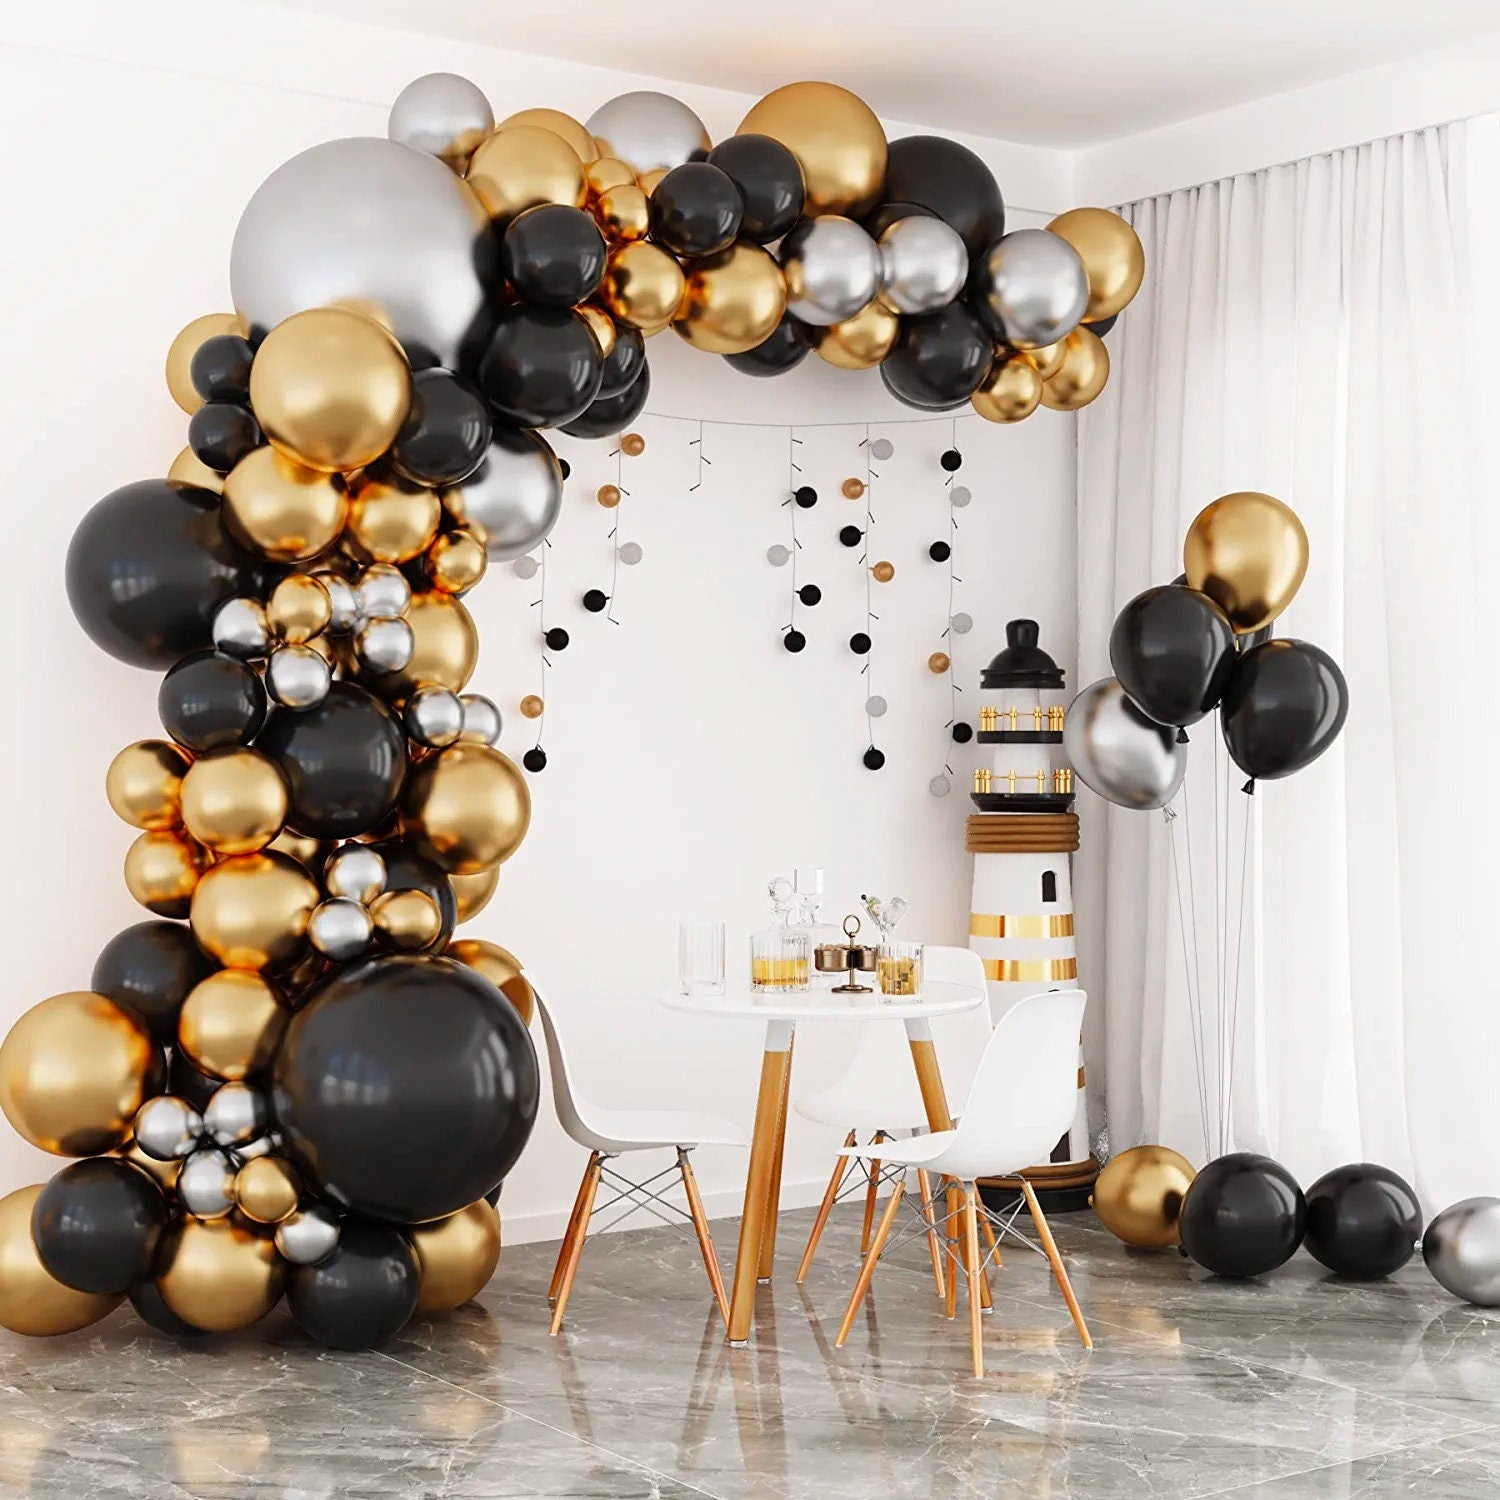 137pcs Black Gold Silver Balloon Arch Kit | DIY Balloon Garland for Baby Shower, Birthday Party, Wedding, Anniversary, Graduation, New Year